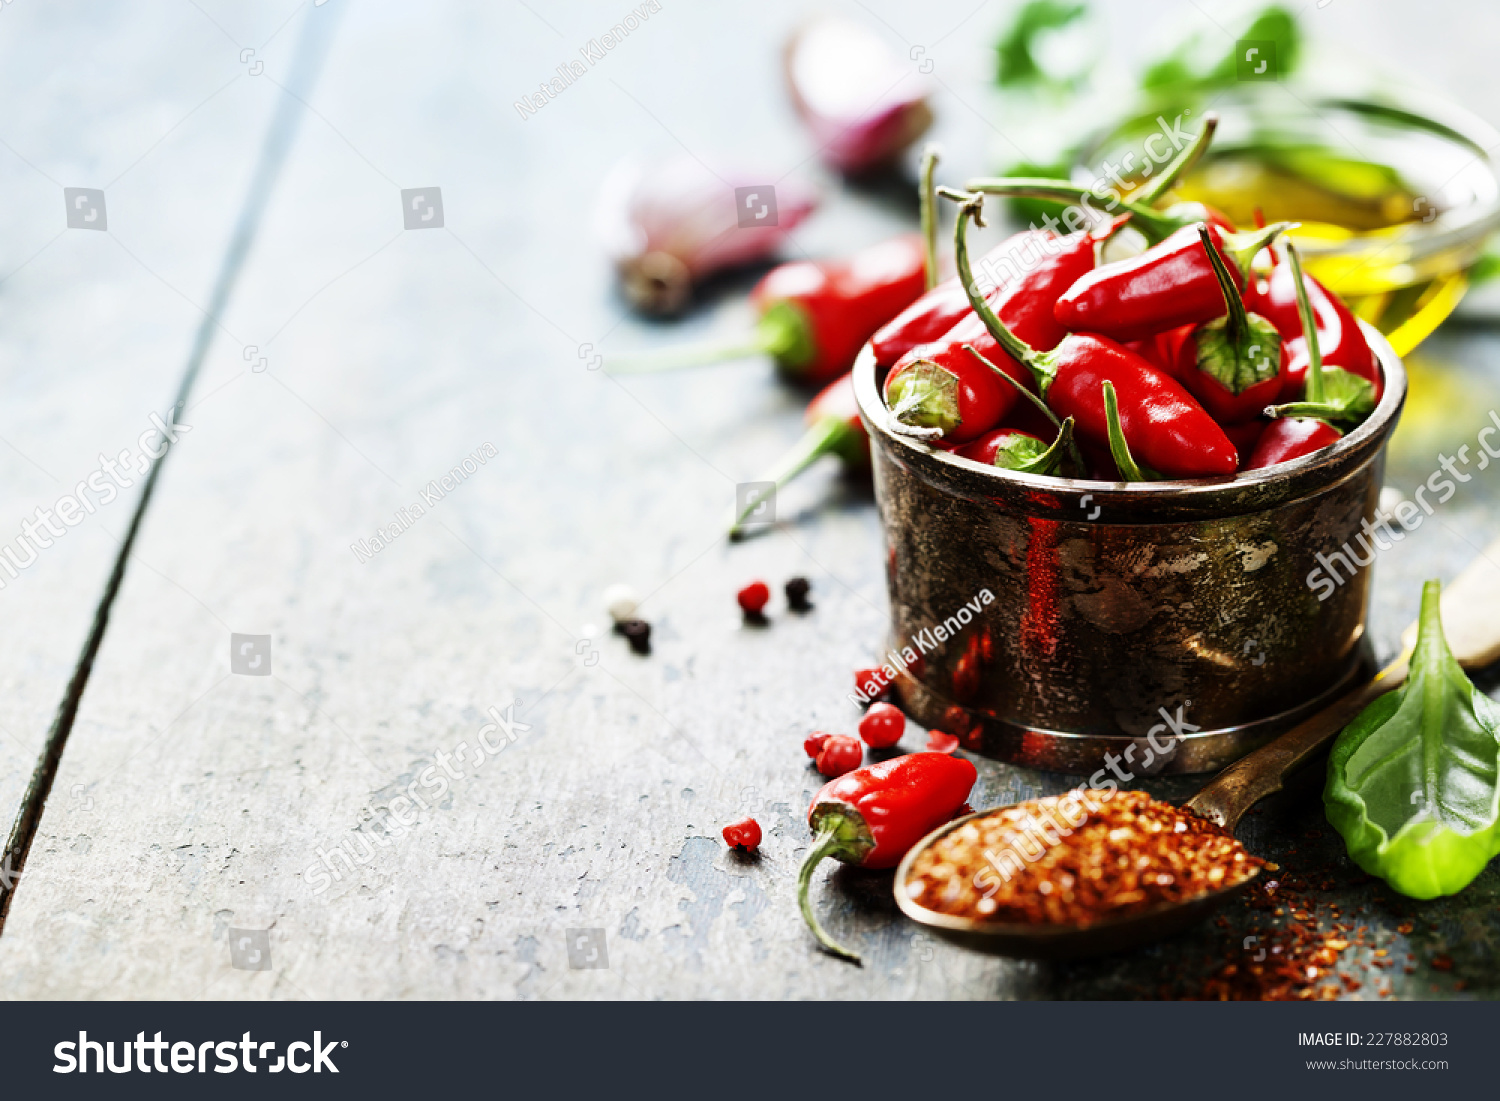 PowerPoint Template: chili plants red hot peppers (jjoppjphk)